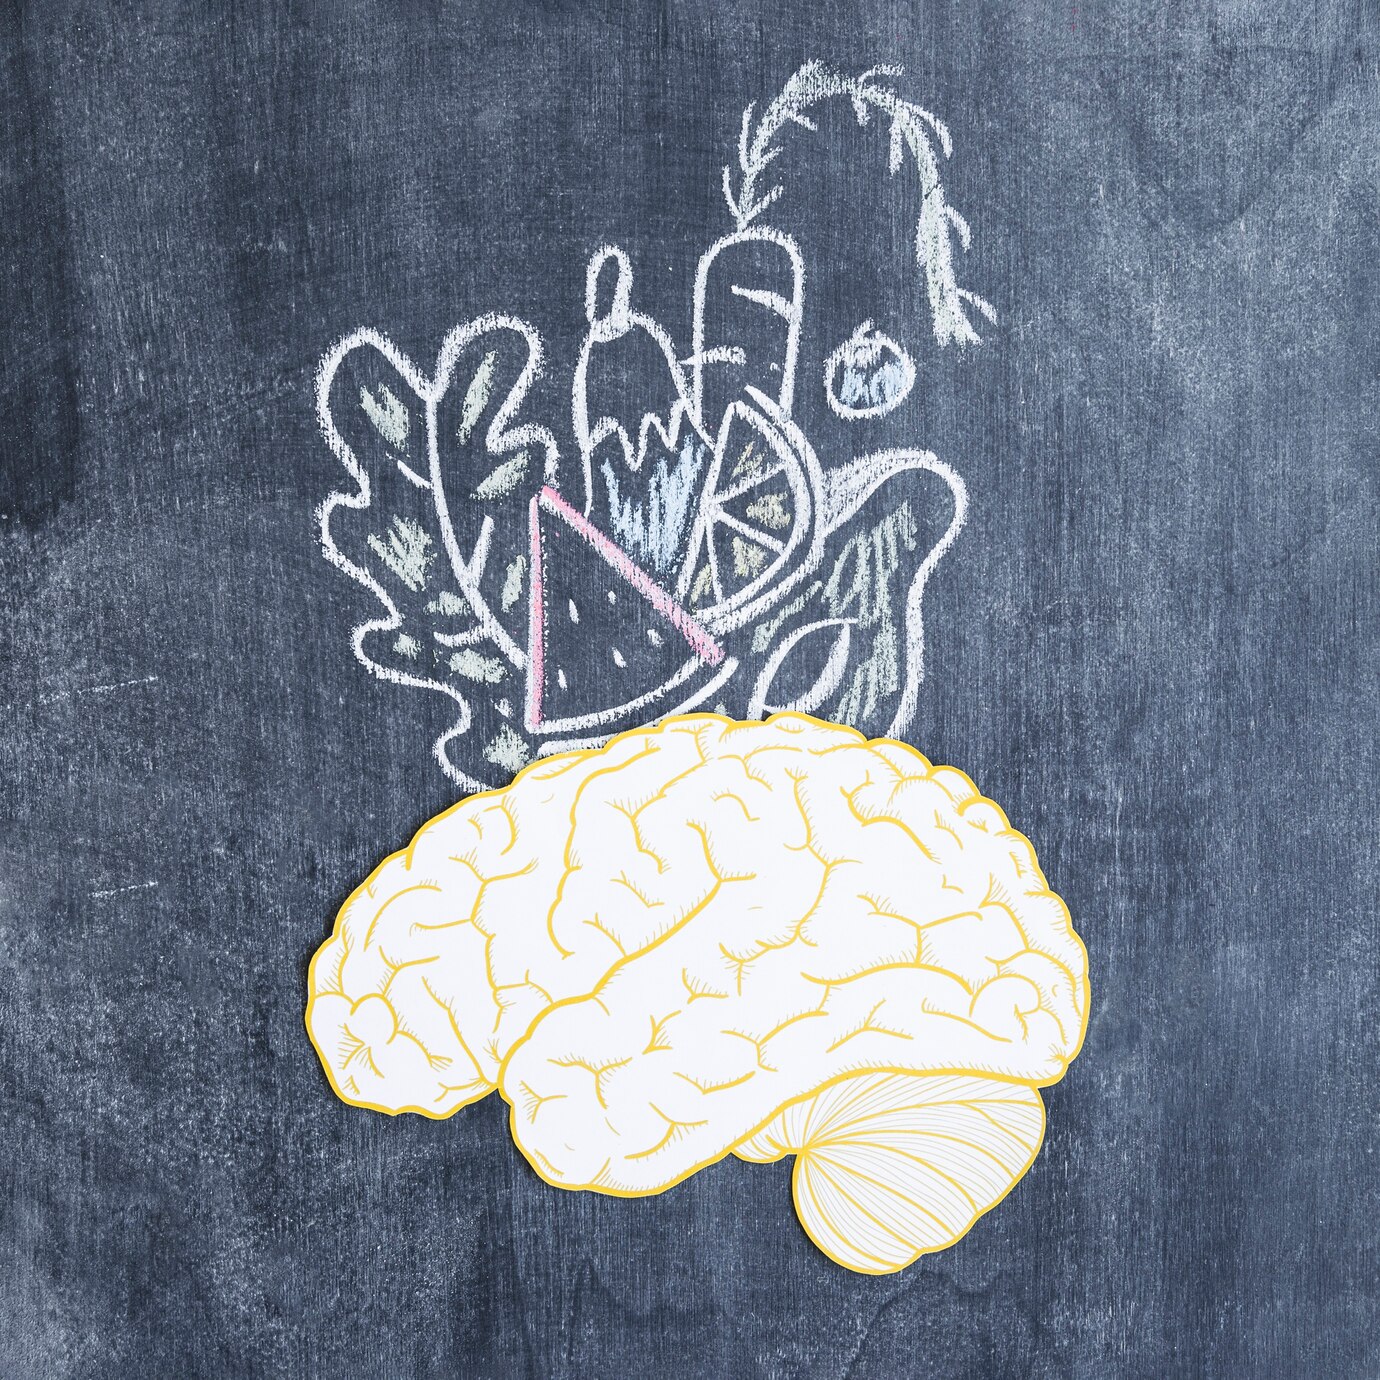 Drawn Vegetables Brain Chalkboard 23 2147873941